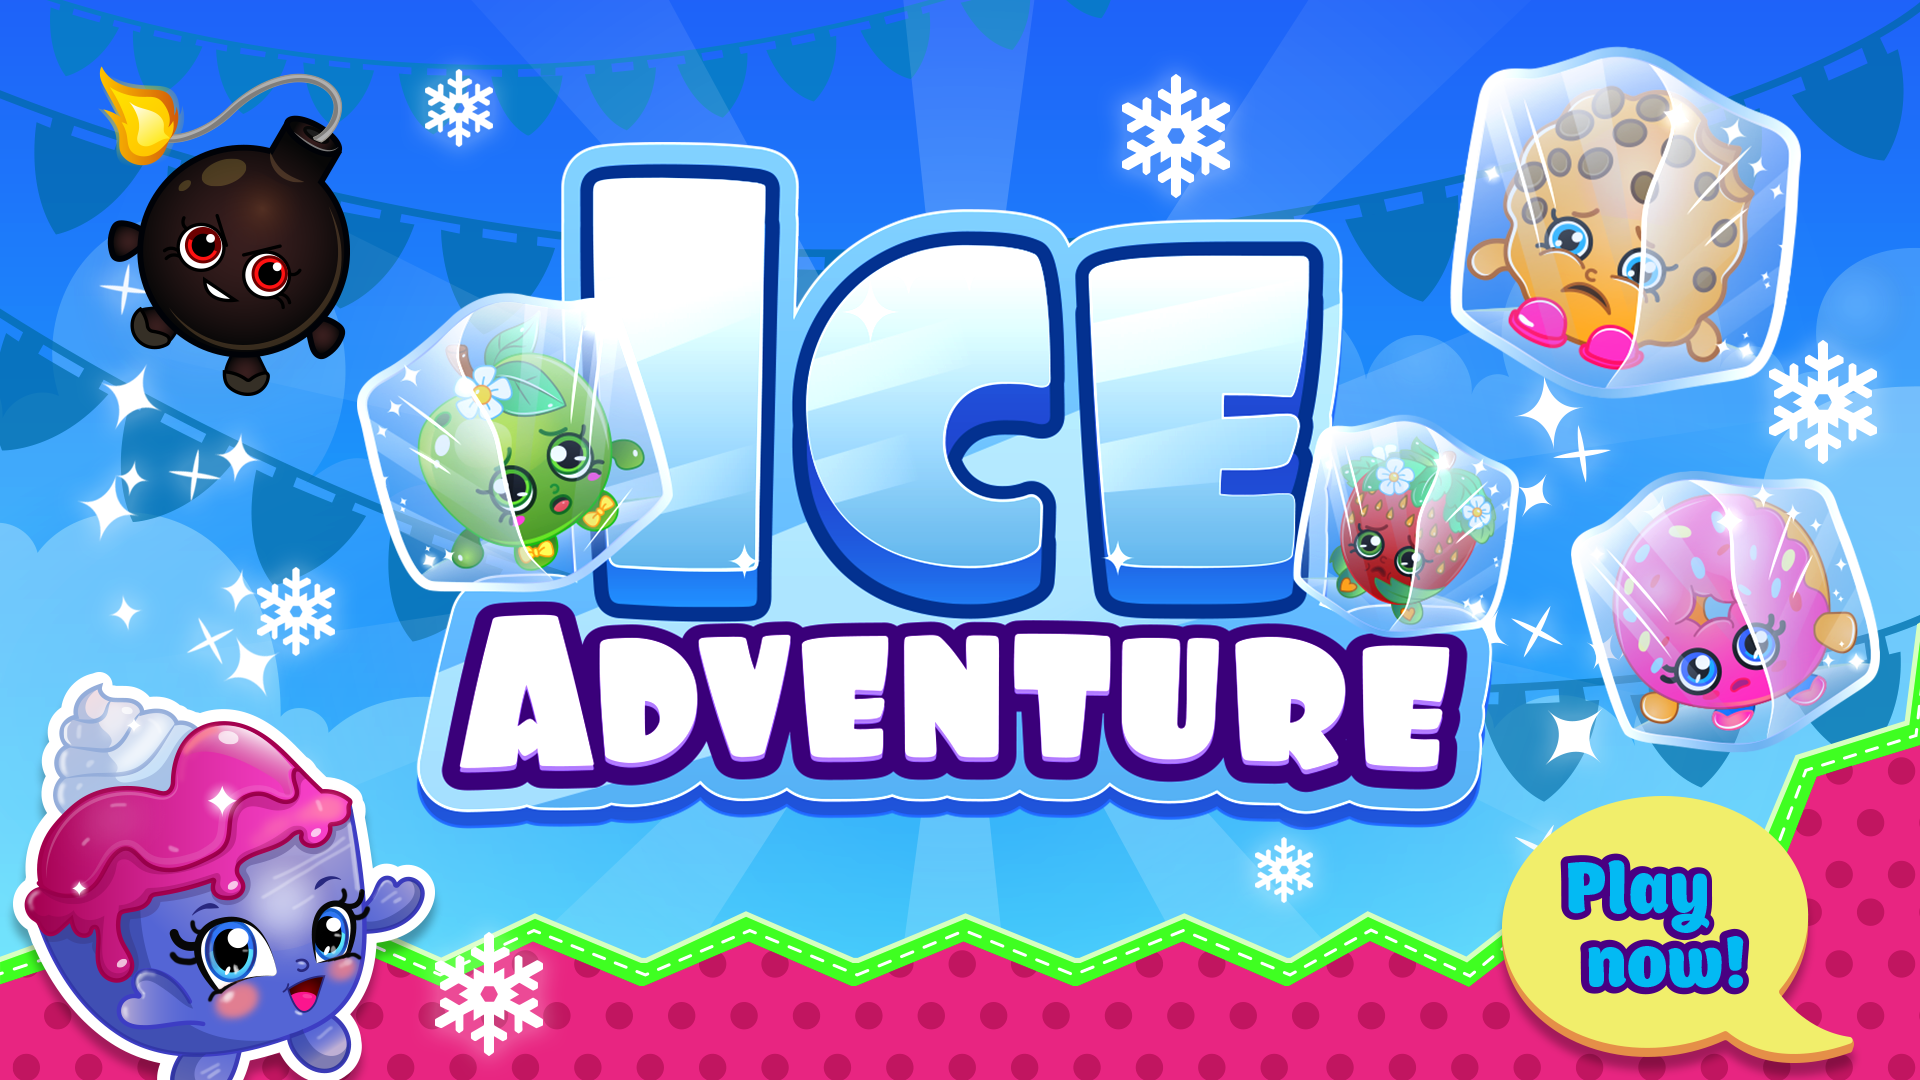 Screenshot 1 of Ice adventure shopkins 1.0